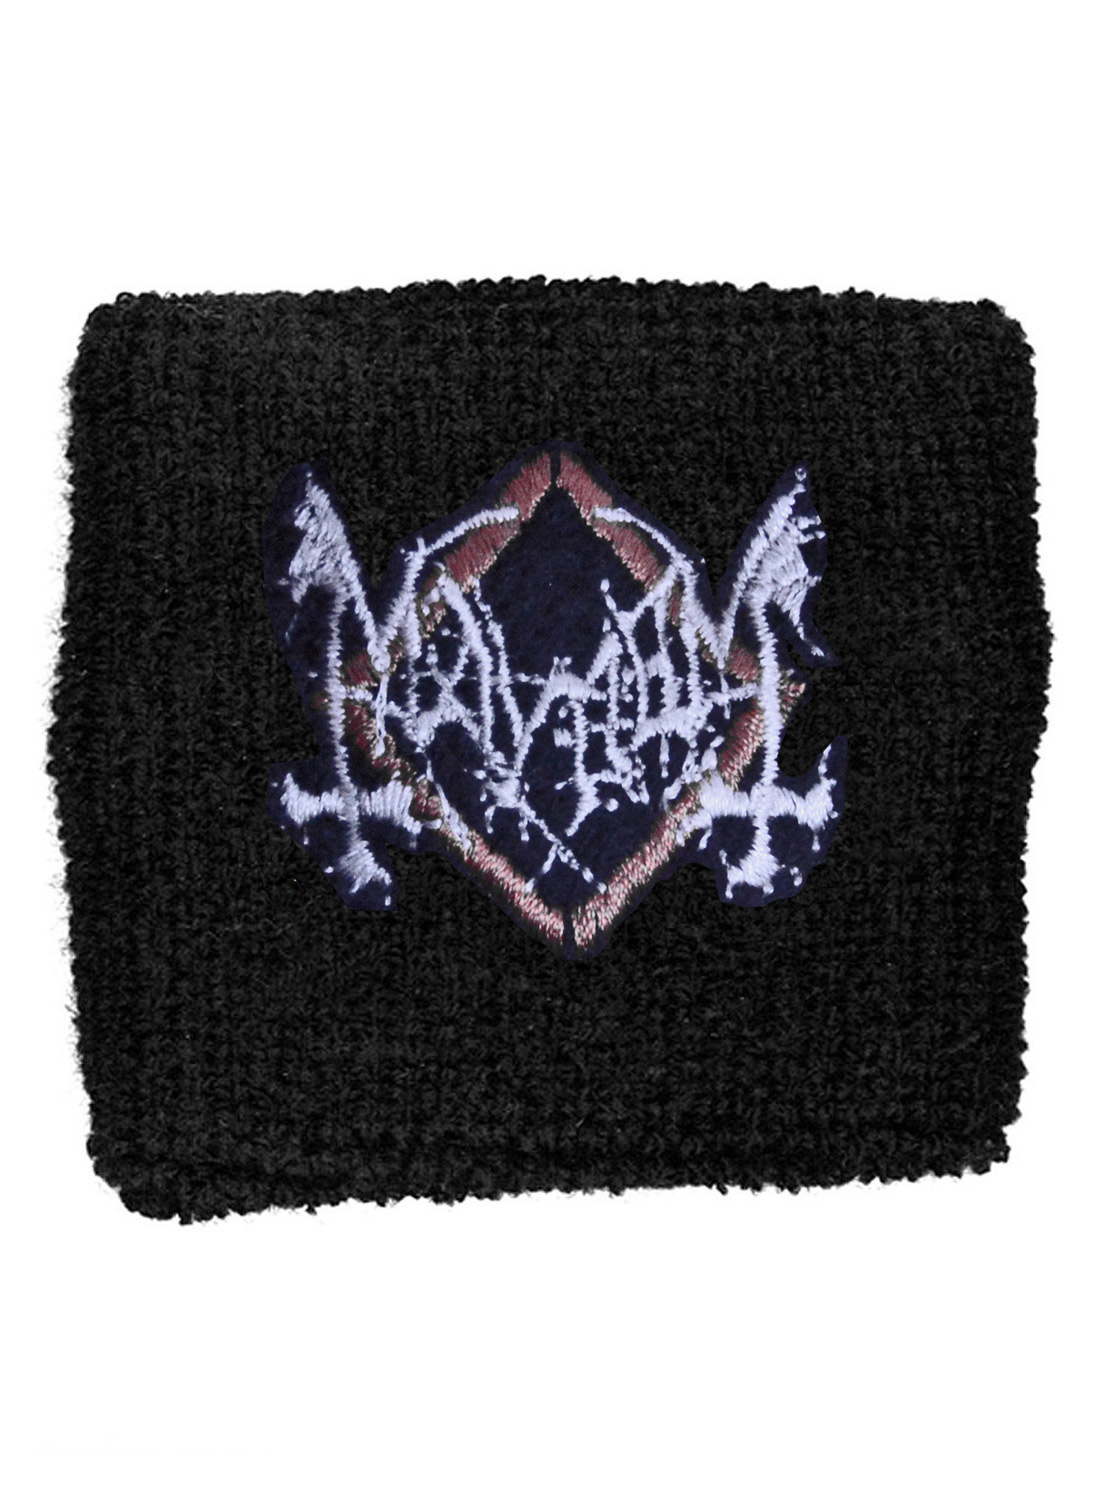 Mayhem Embroidered Sweatband